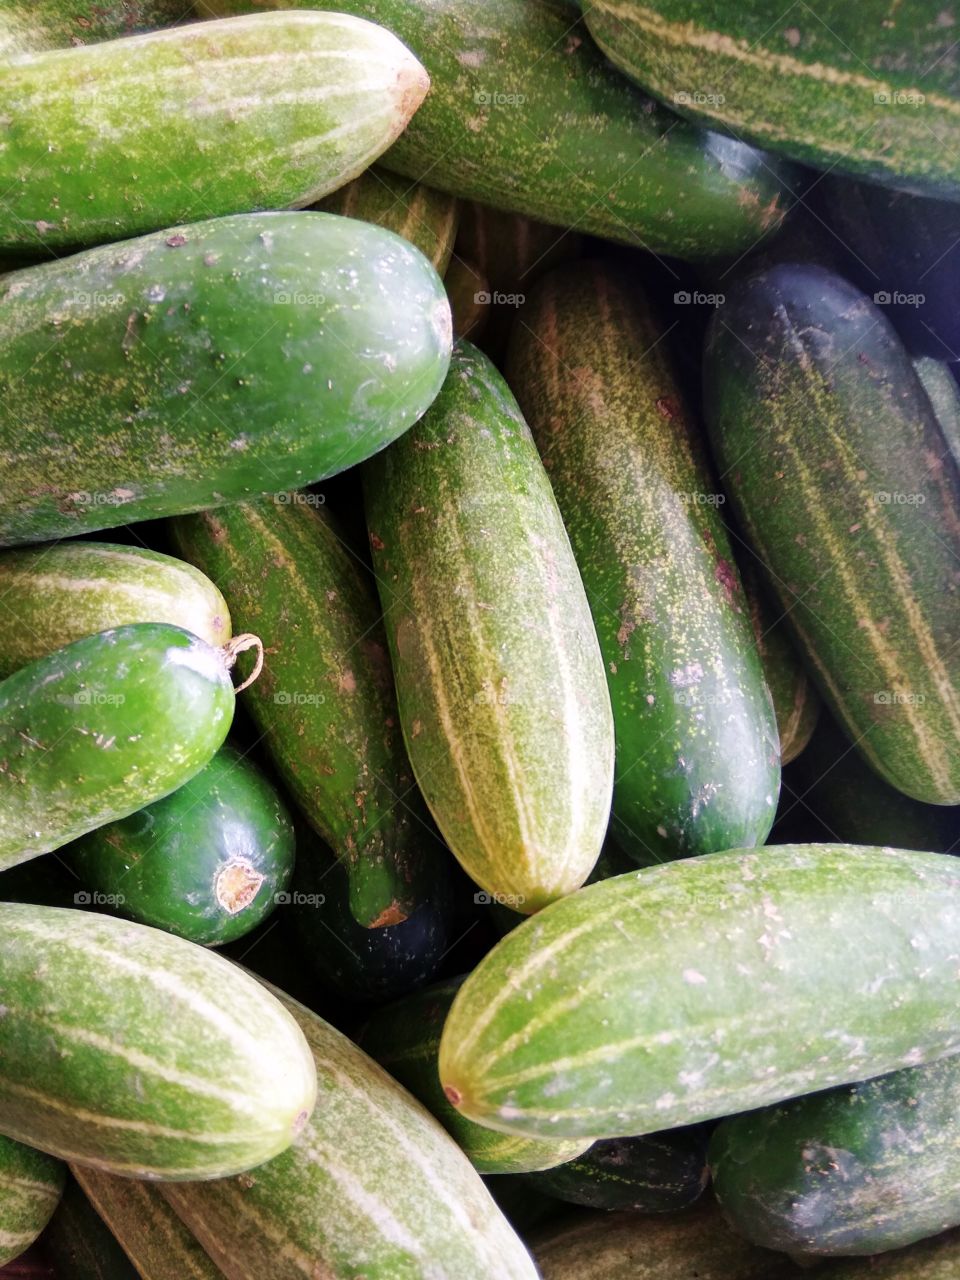 Local cucumber